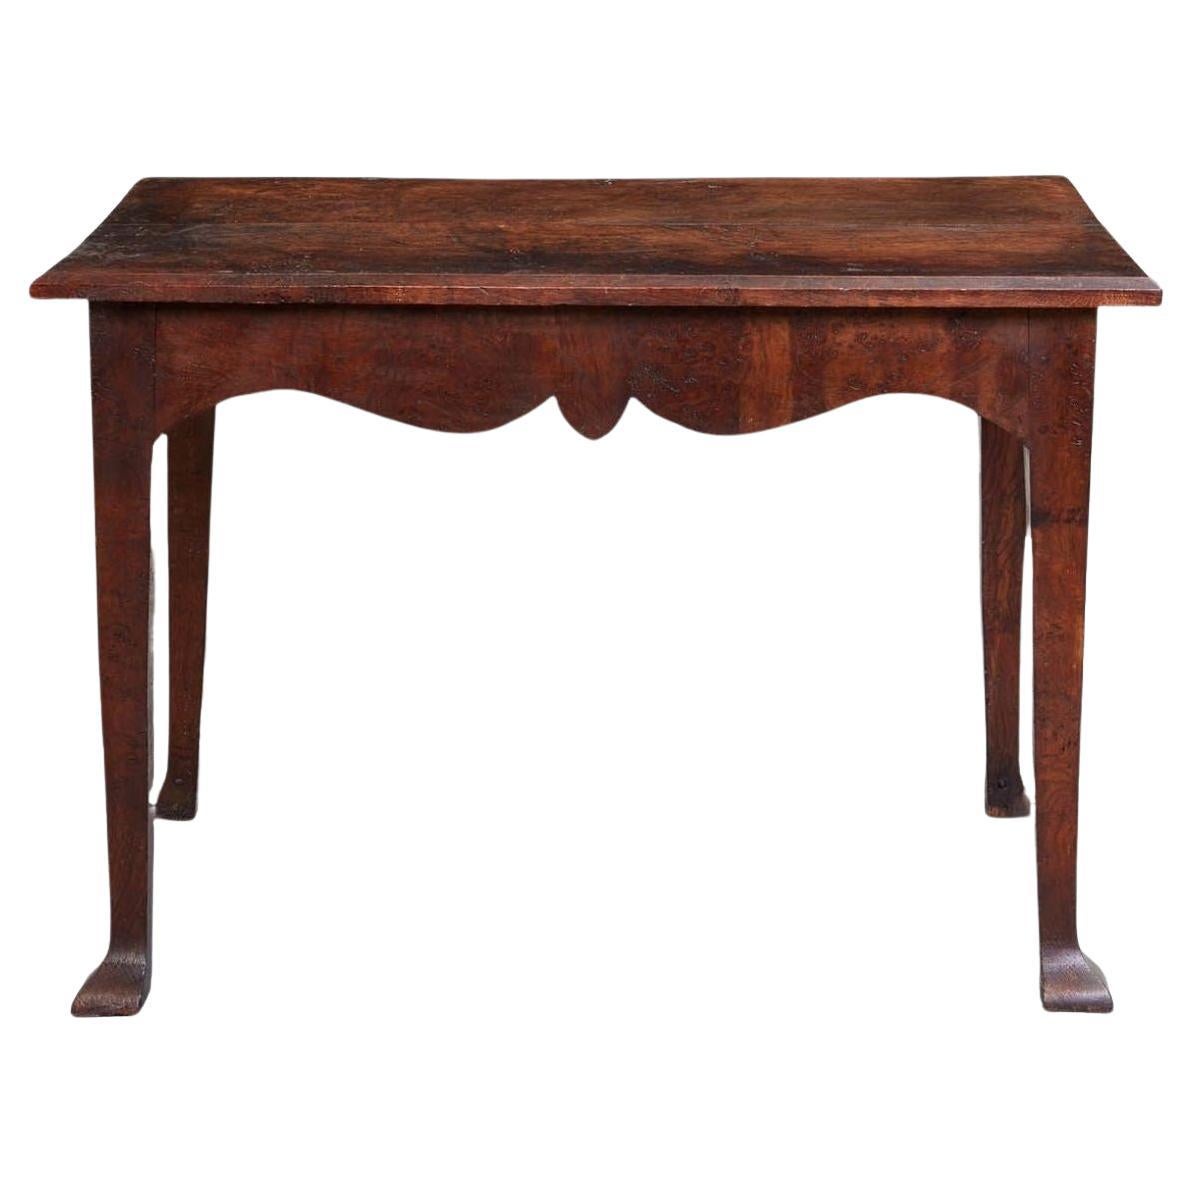 18th c. English Burr Oak Center Table For Sale